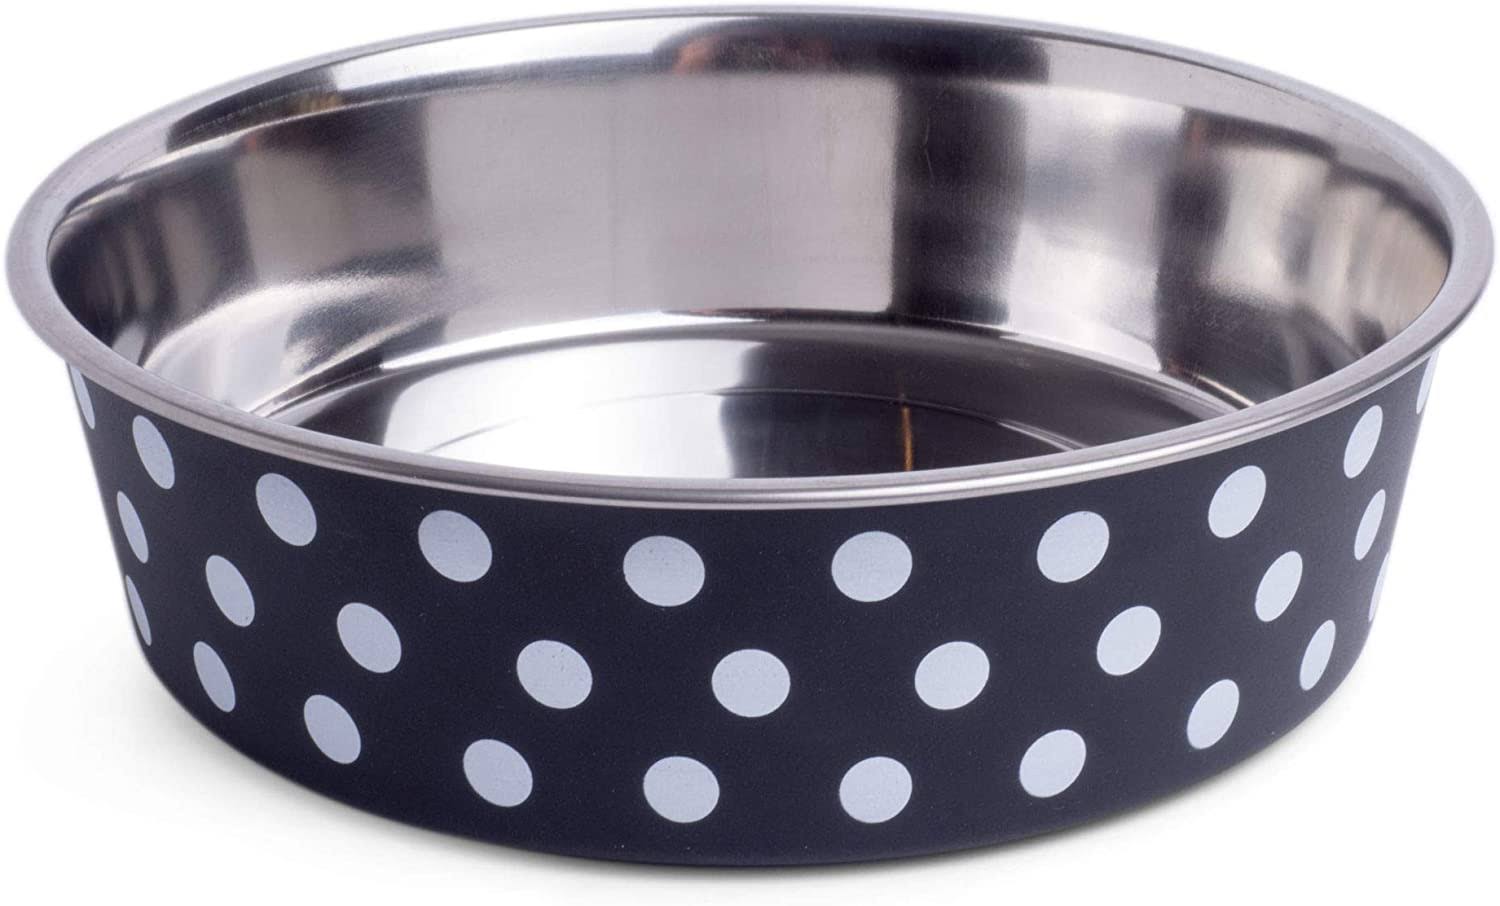 Petface Black and White Spots Deli Dog Bowl, 21 cm